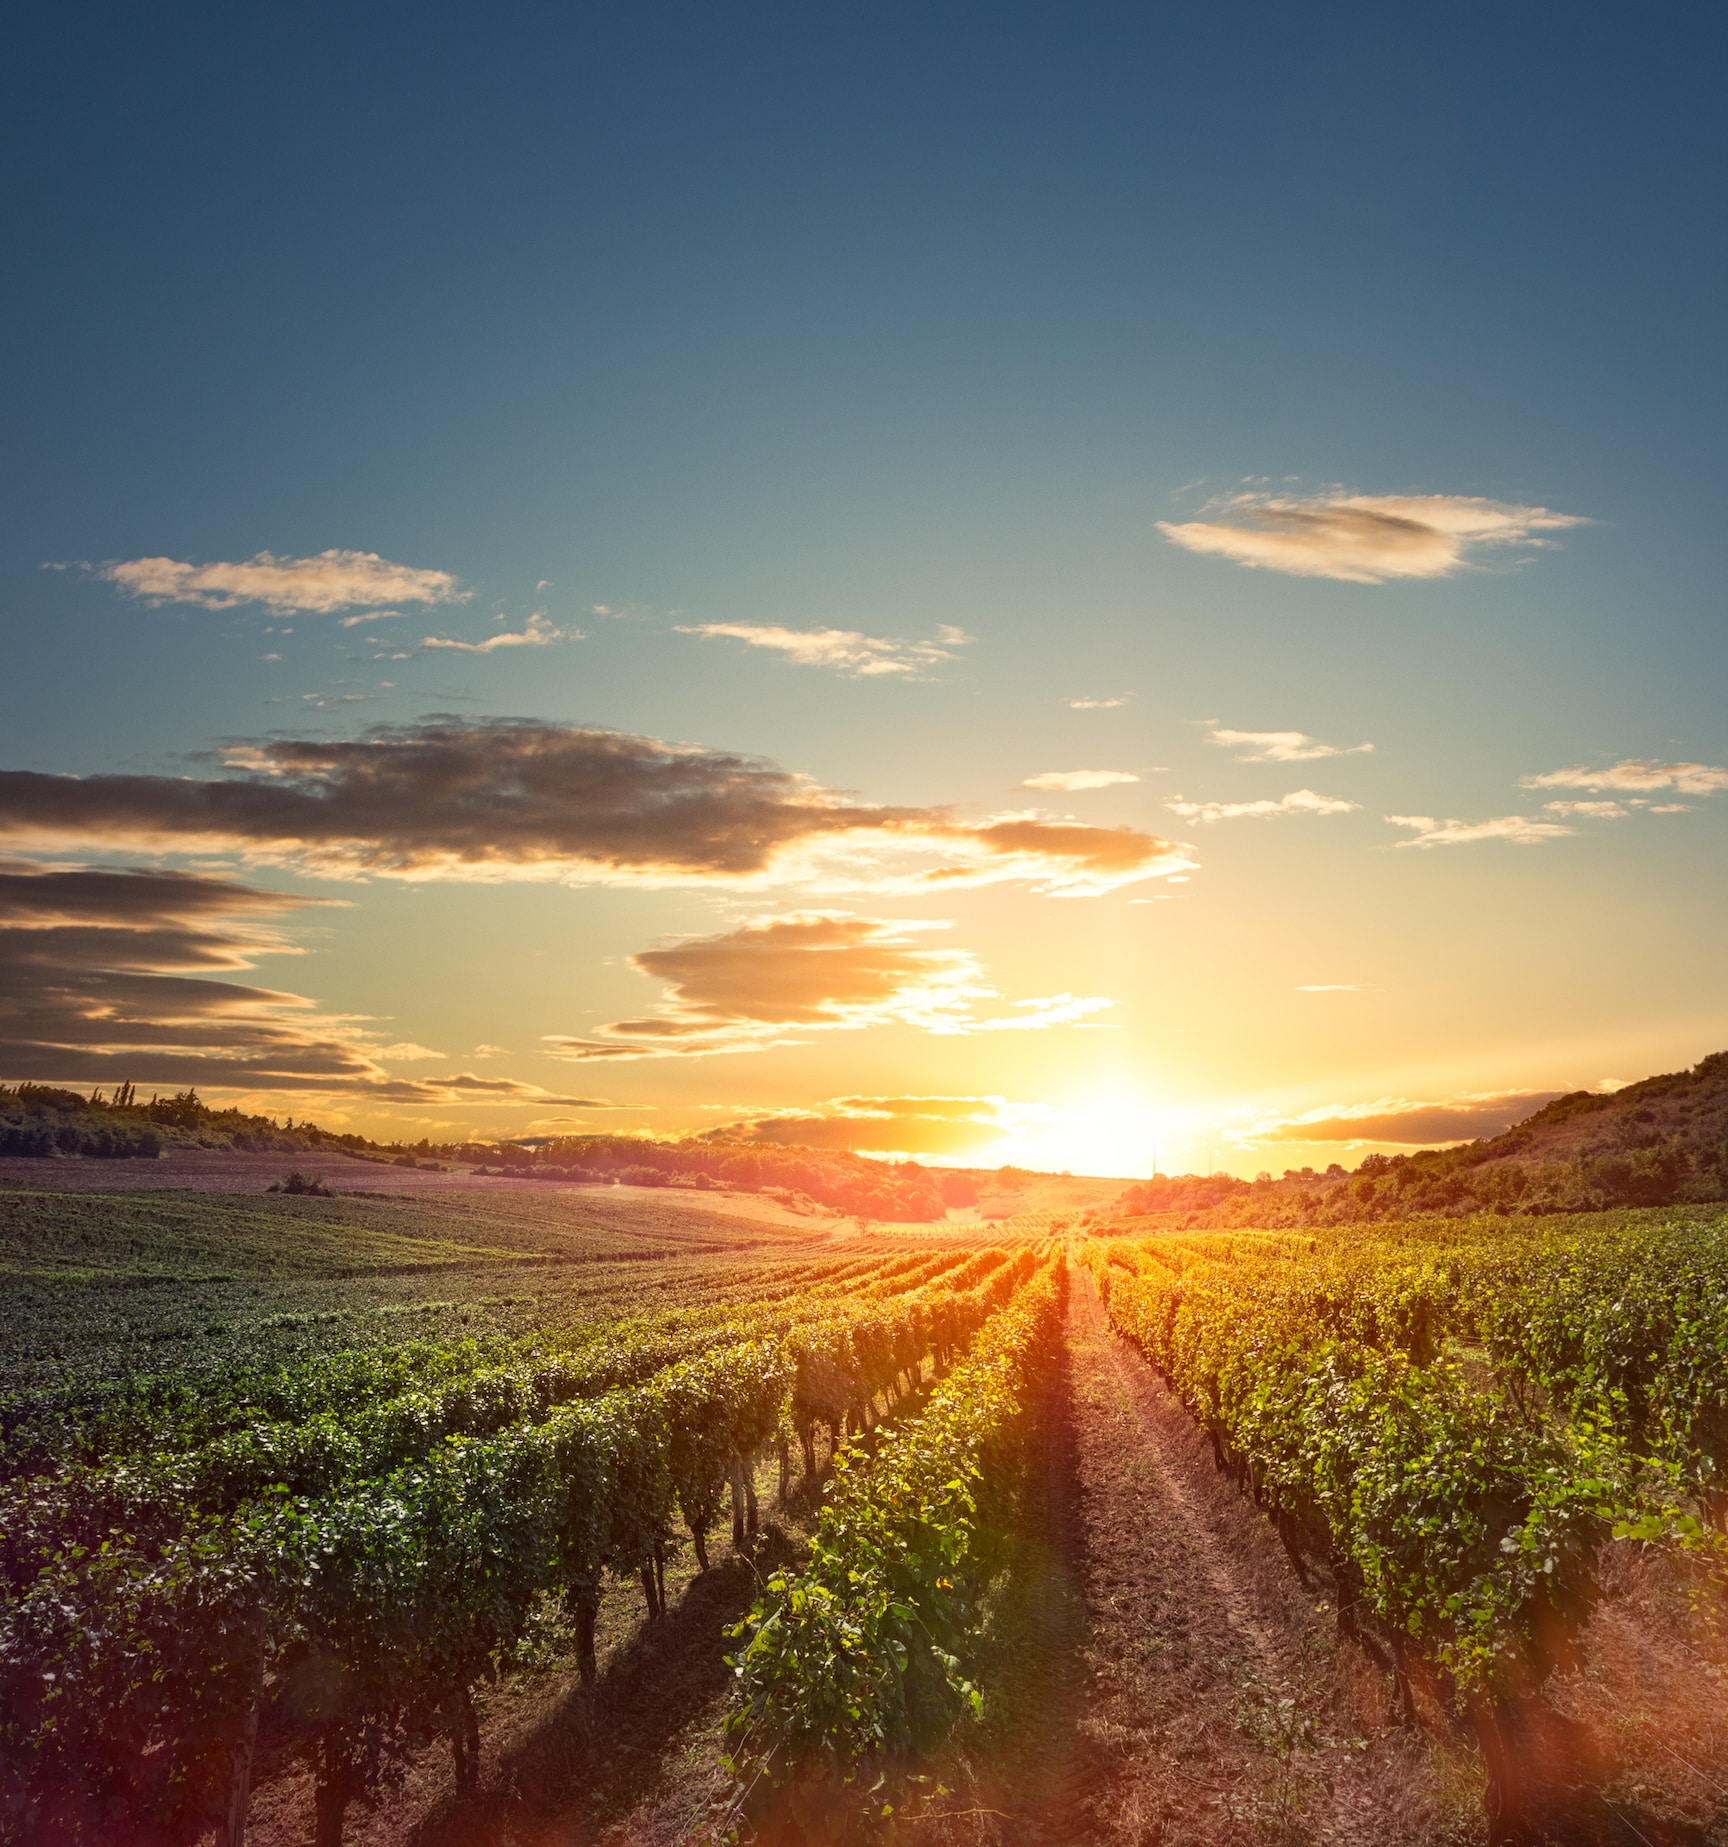 Vineyard at sunset, Okanagan Valley, British Columbia